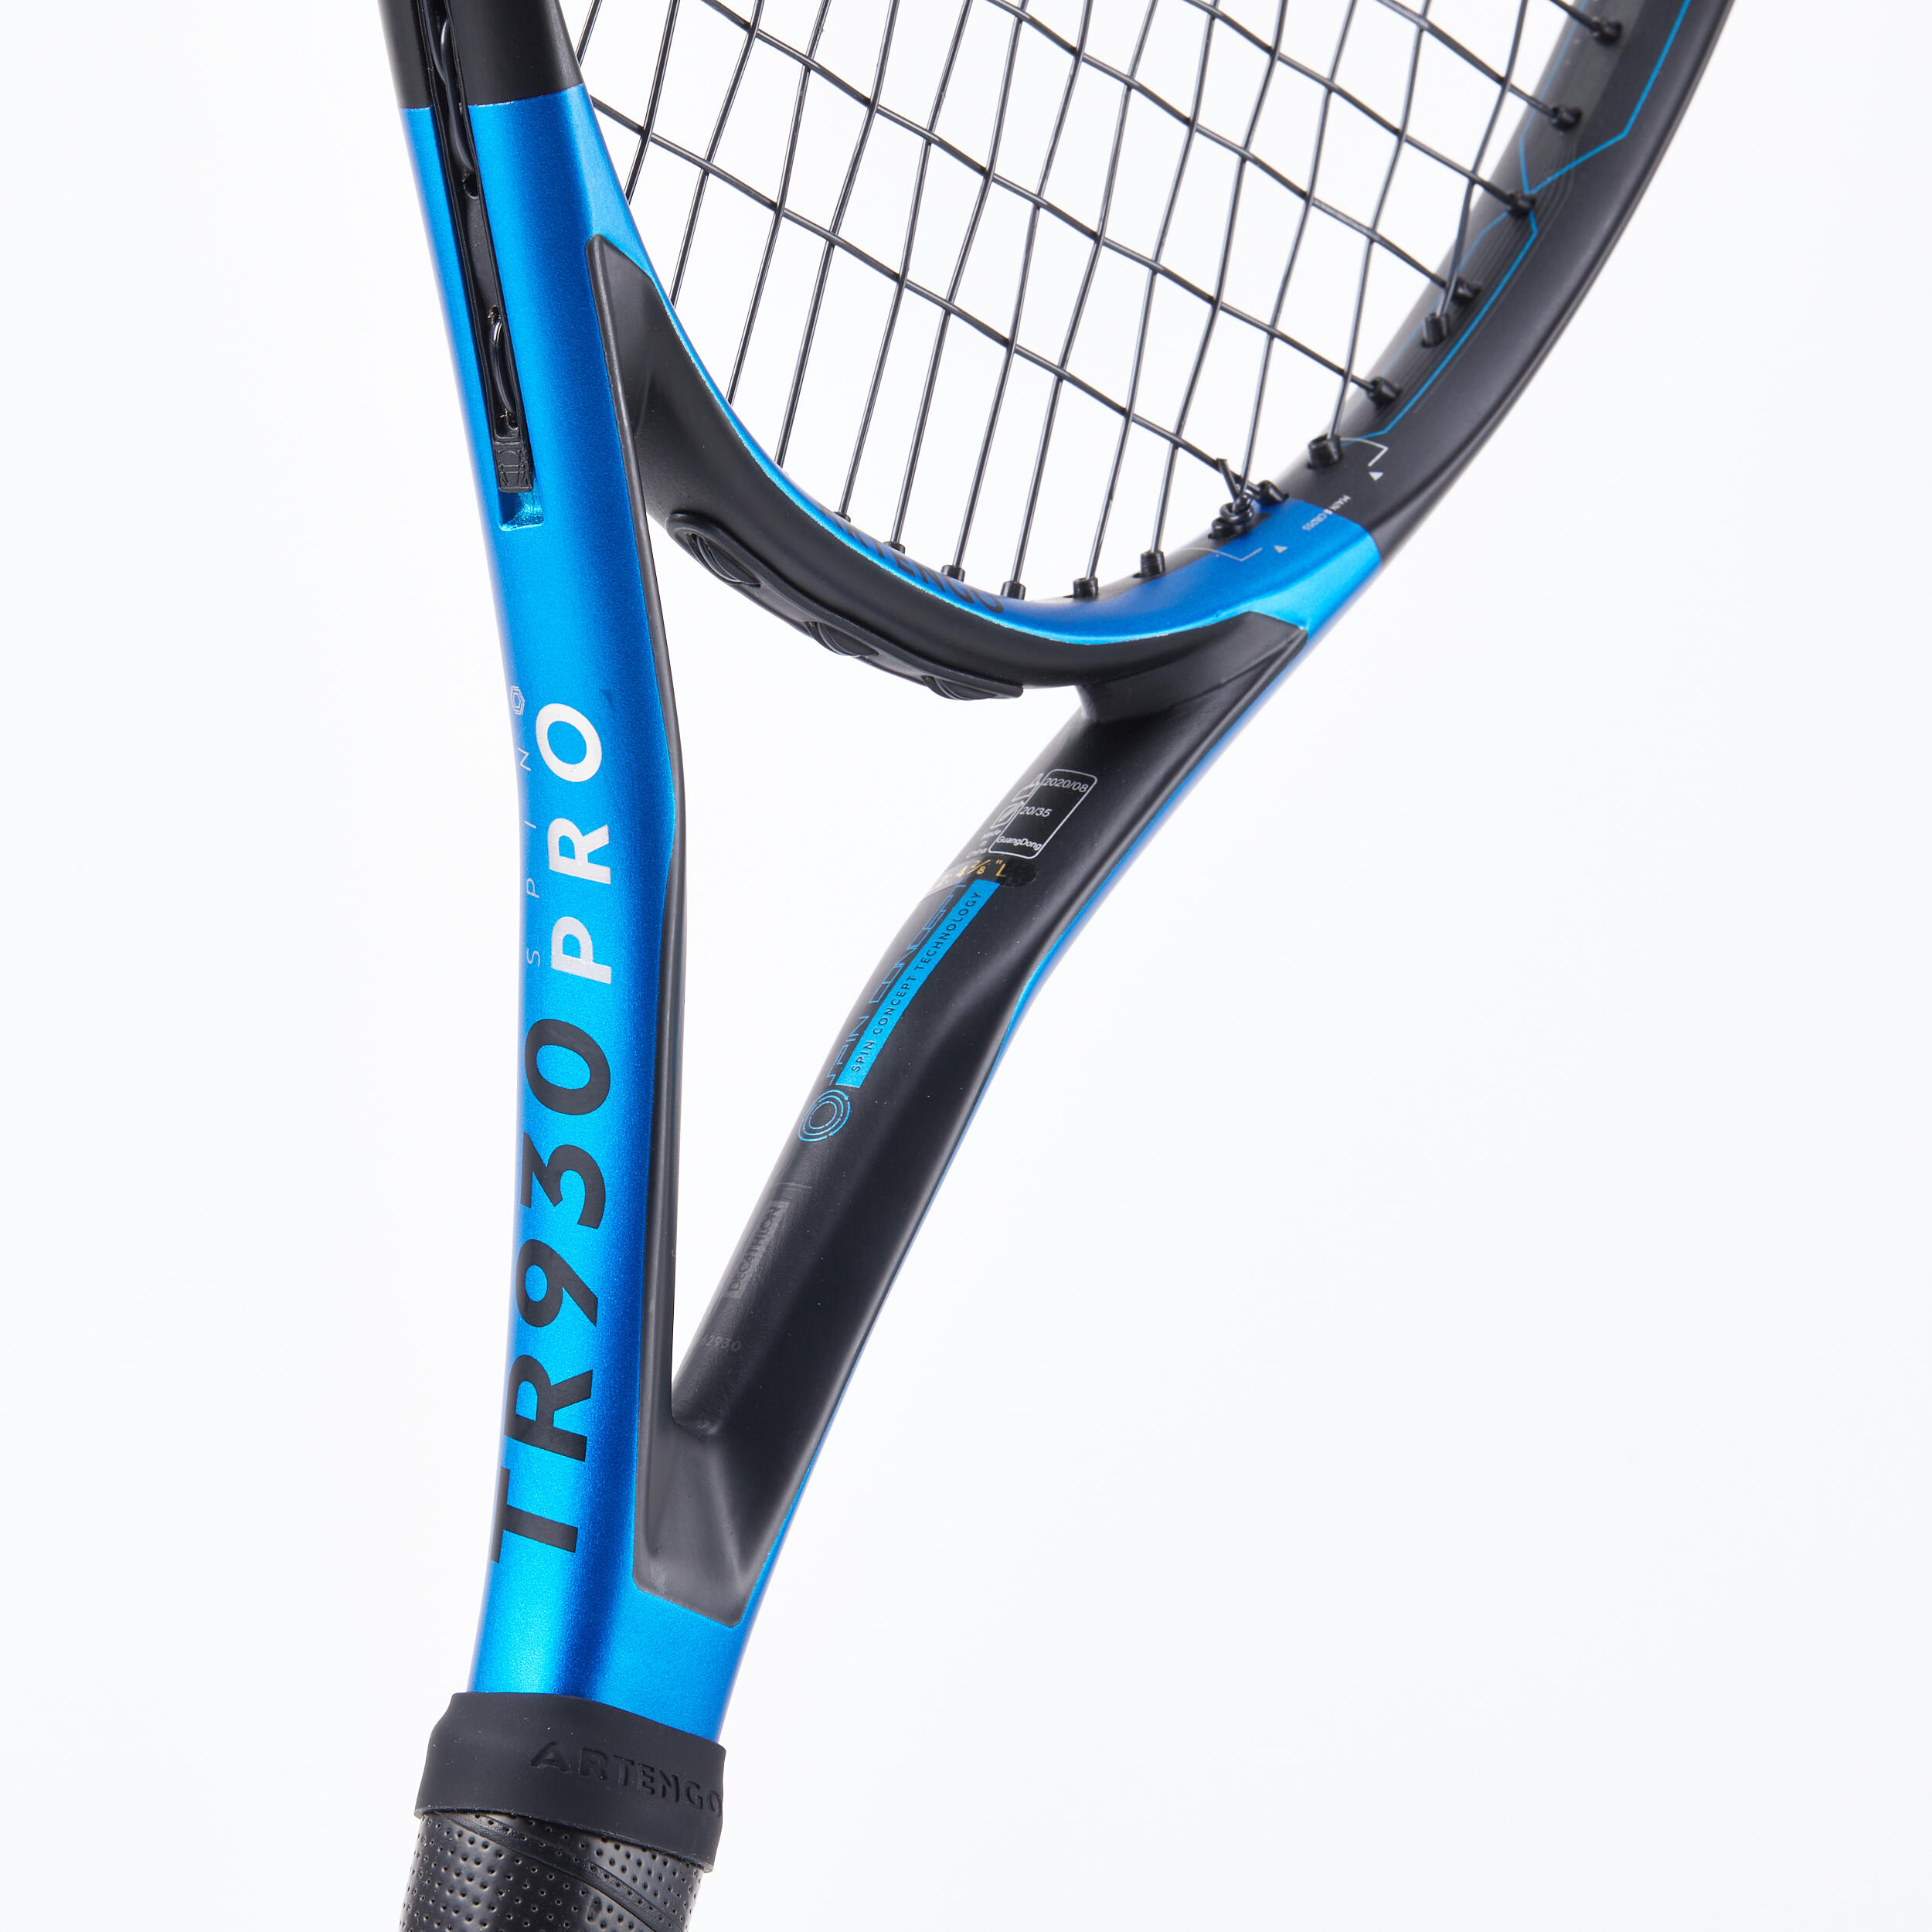 Raquette de tennis - TR 930 bleu - ARTENGO